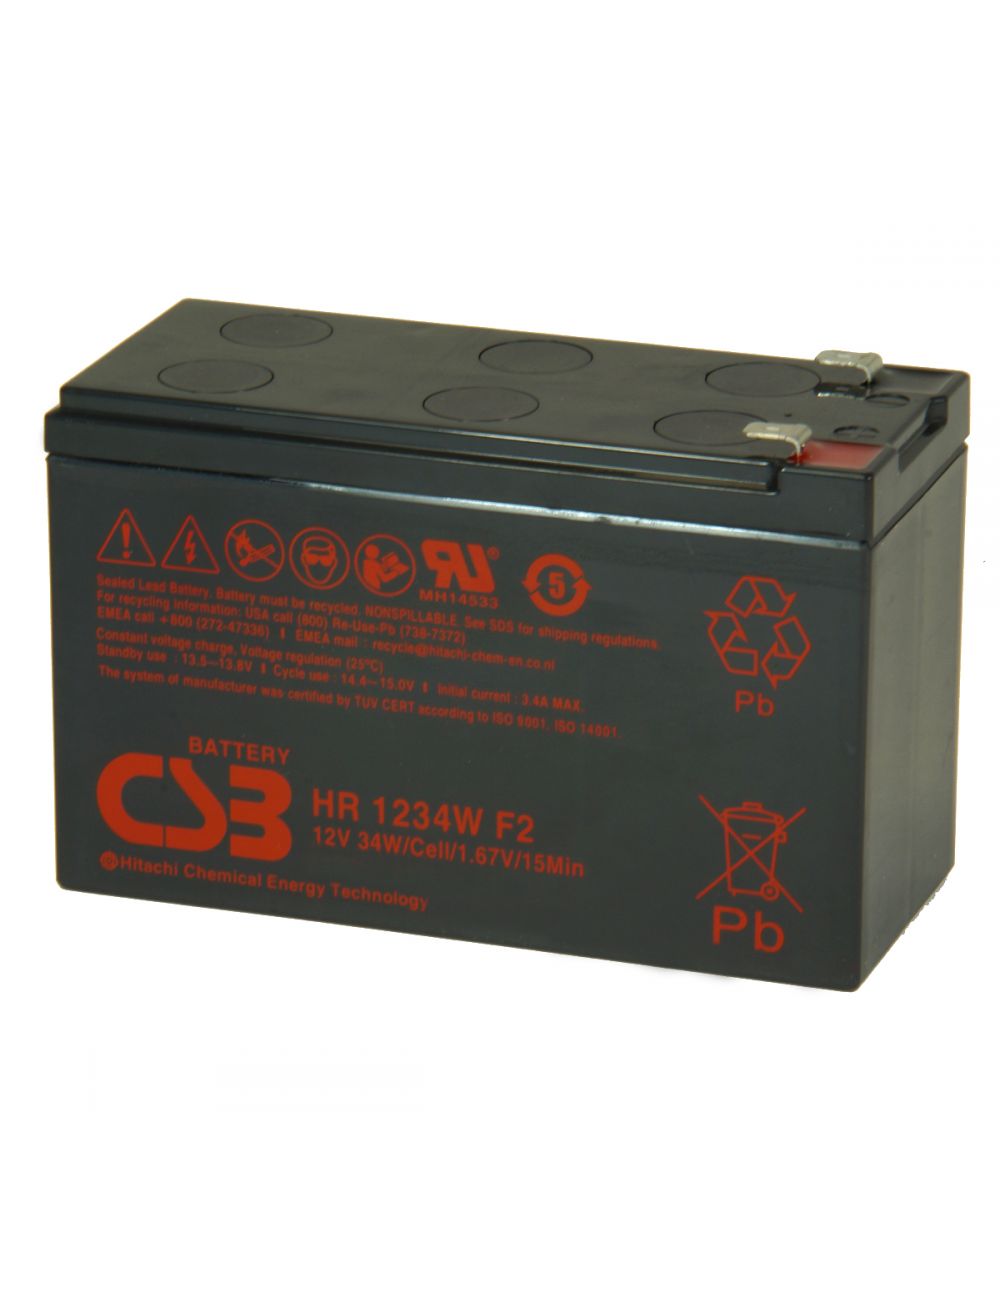 Аккумулятор csb hr1234w. Батарея аккумуляторная для ИБП DJW 12-7.2. Аккумулятор CSB ups 12360 6. Аккумулятор CSB ups 122406 f2 (12v, 6 Ah) для ups. Ups 12360 XW аккумуляторная батарея.